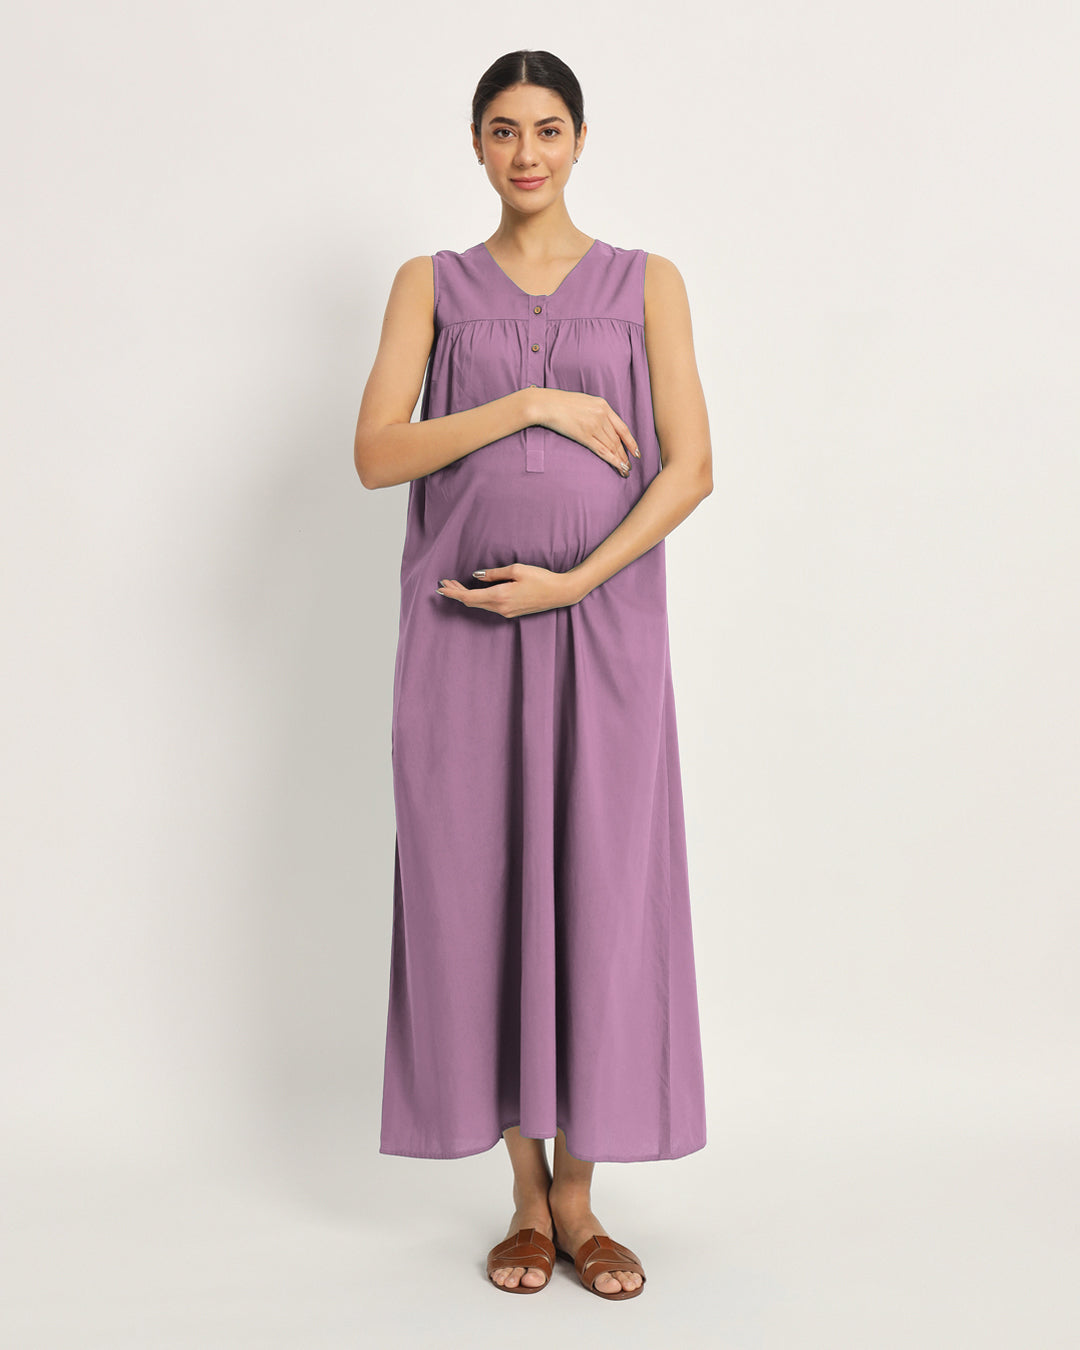 Iris Pink Mommylicious Maternity & Nursing Dress